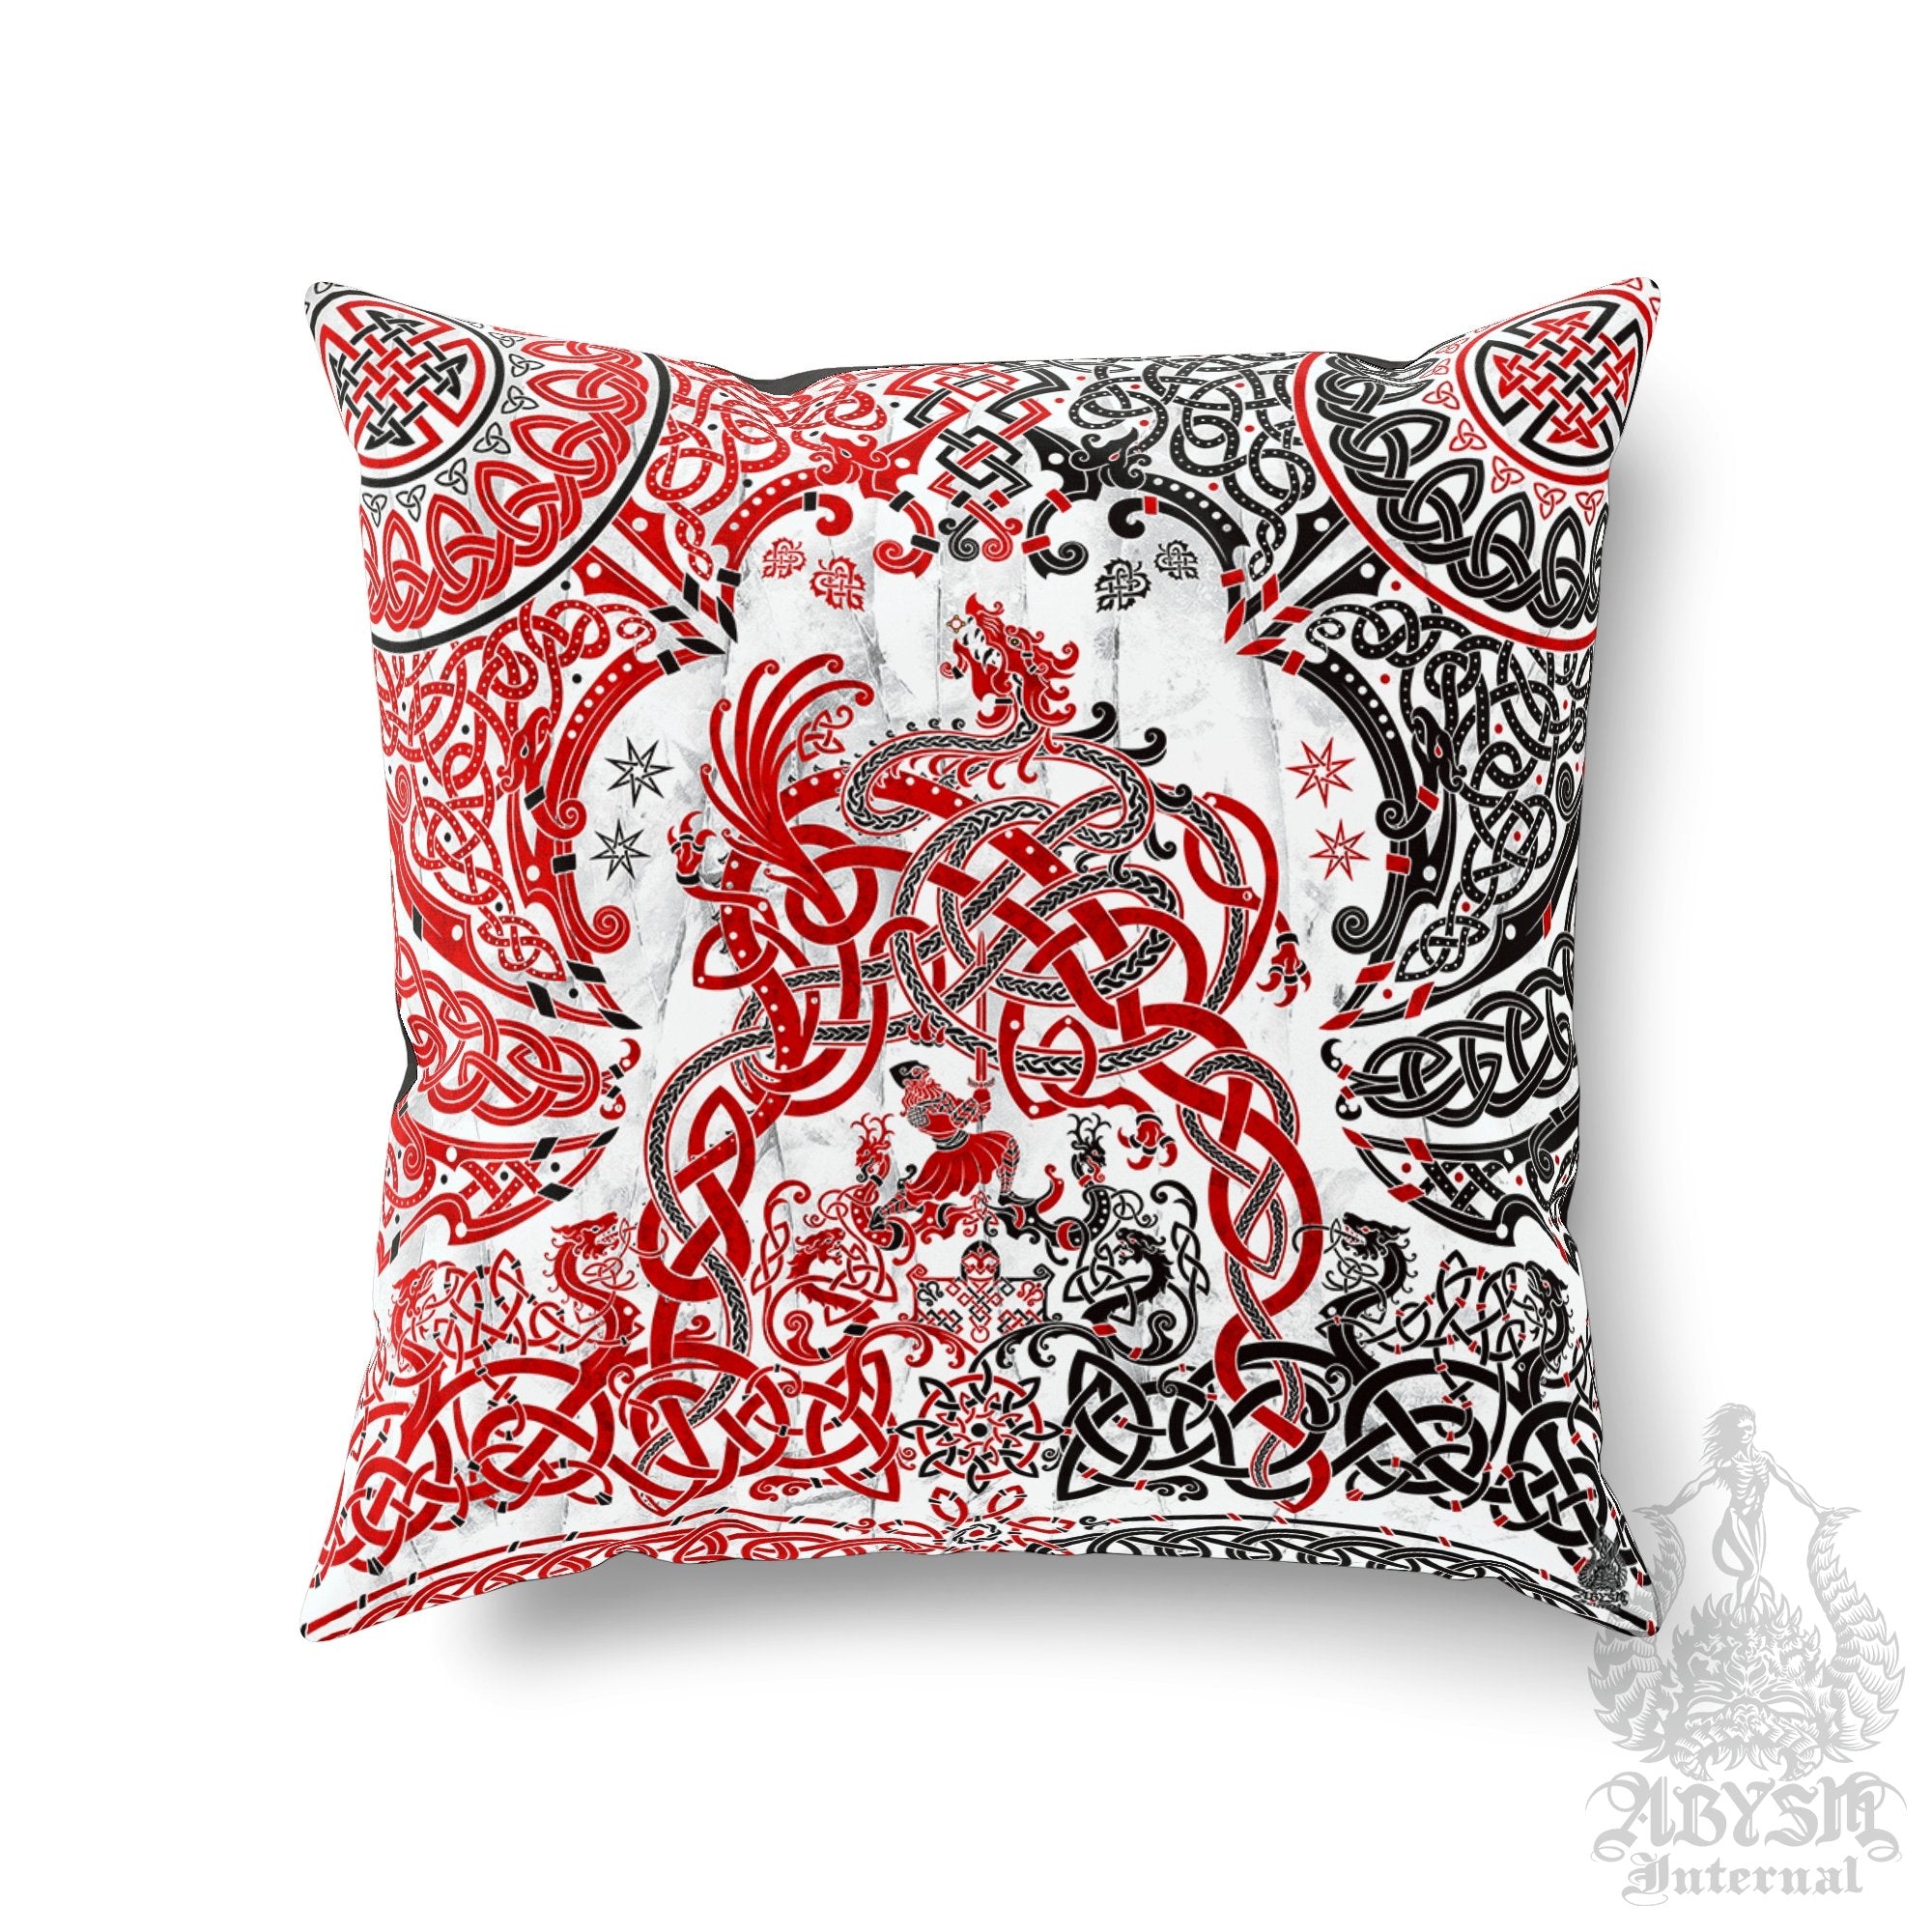 Viking Throw Pillow, Decorative Accent Cushion, Gamer Room Decor, Dragon Fafnir, Nordic Art, Alternative Home - Bloody White Goth - Abysm Internal